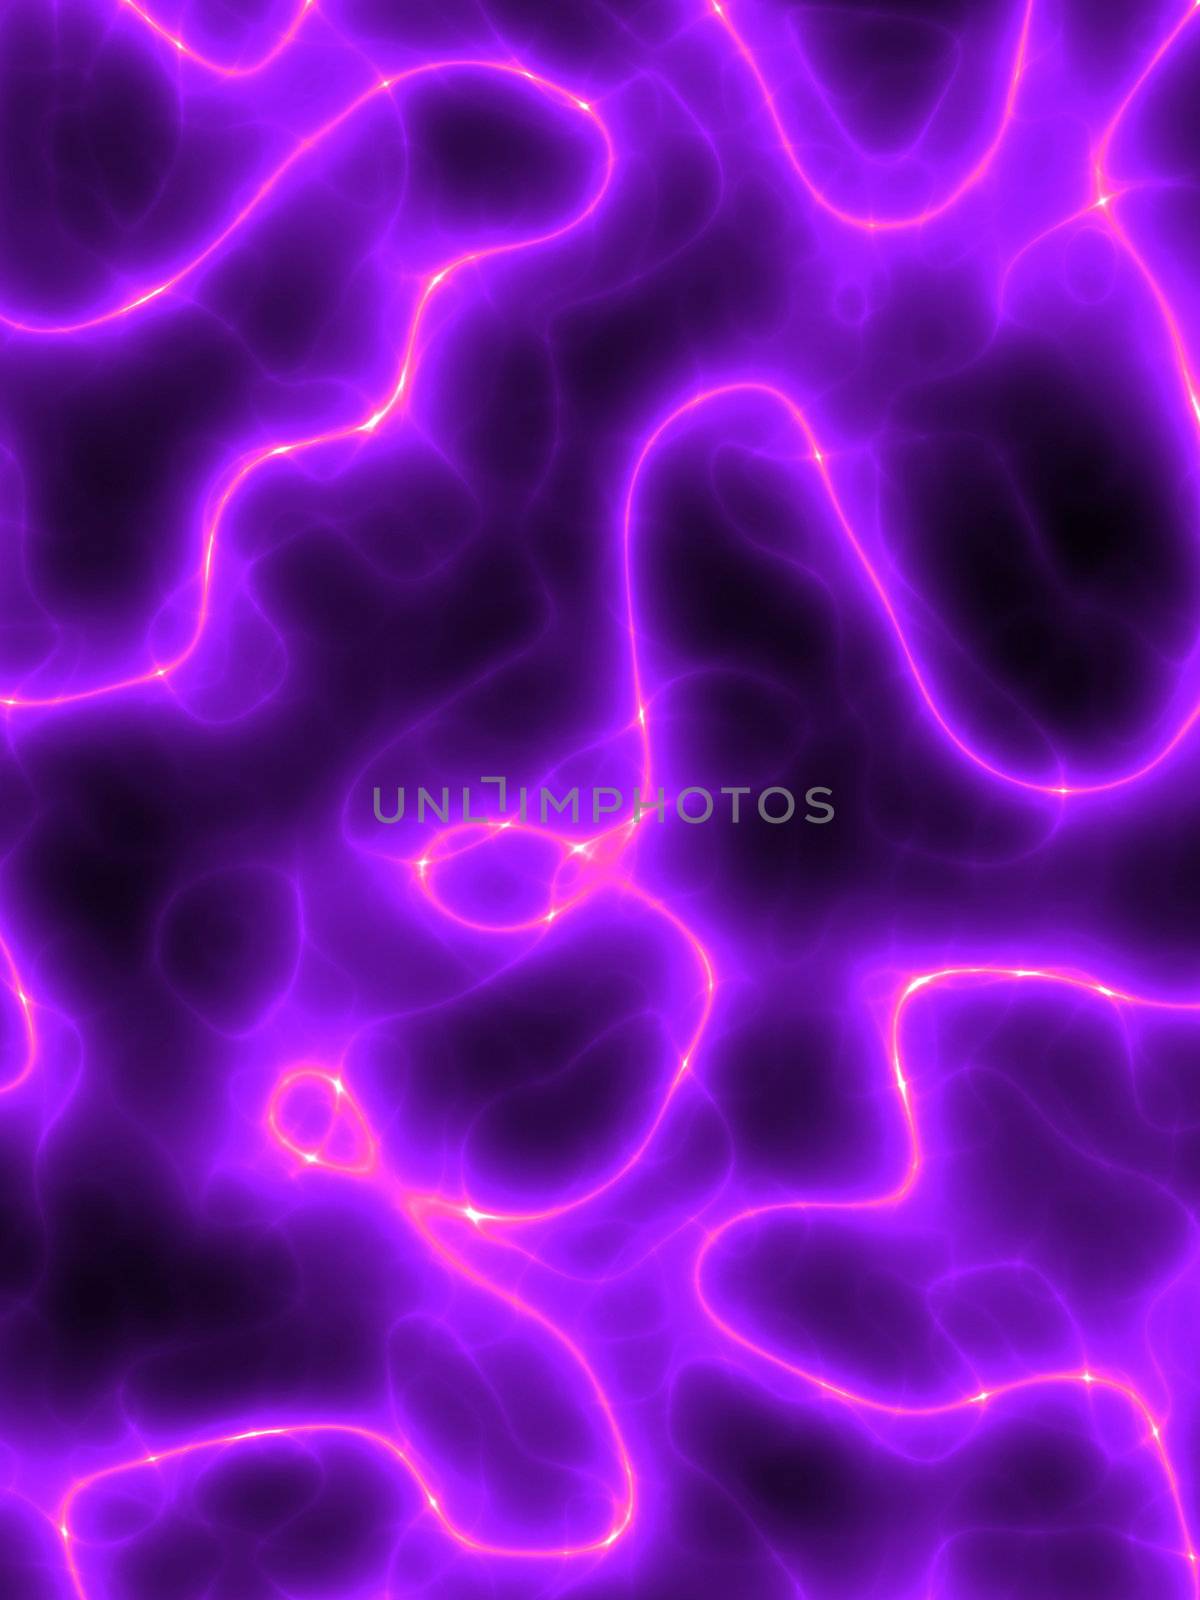 A purple electric background illustration - sort of looks like a liquid plasma.